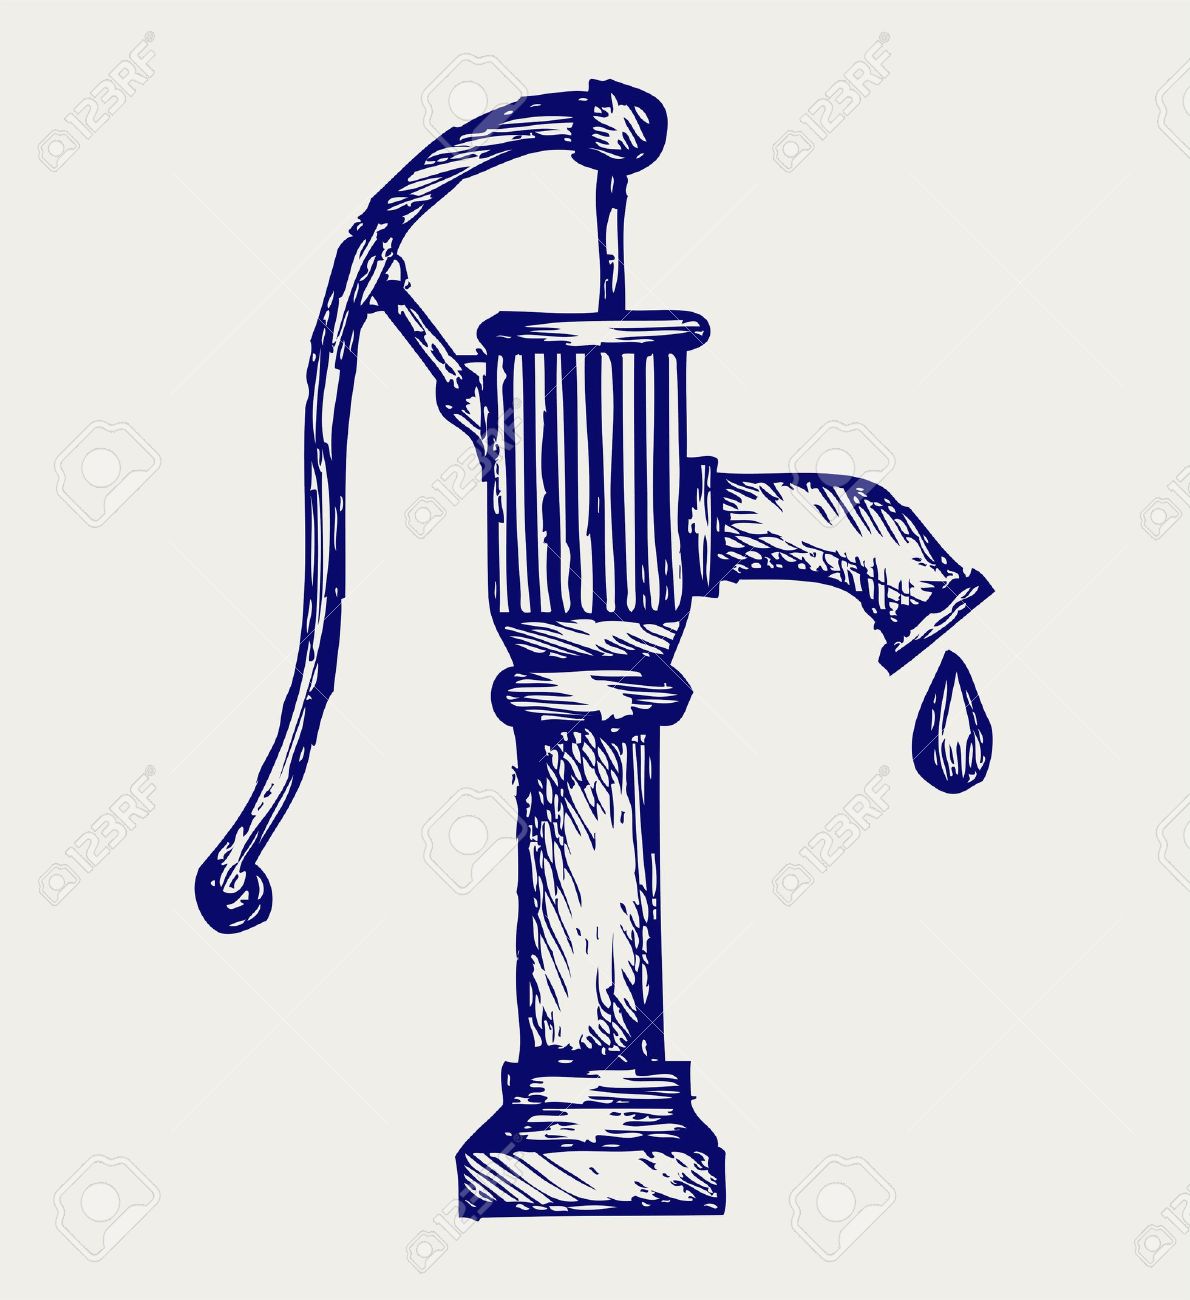 Water well pump clipart.